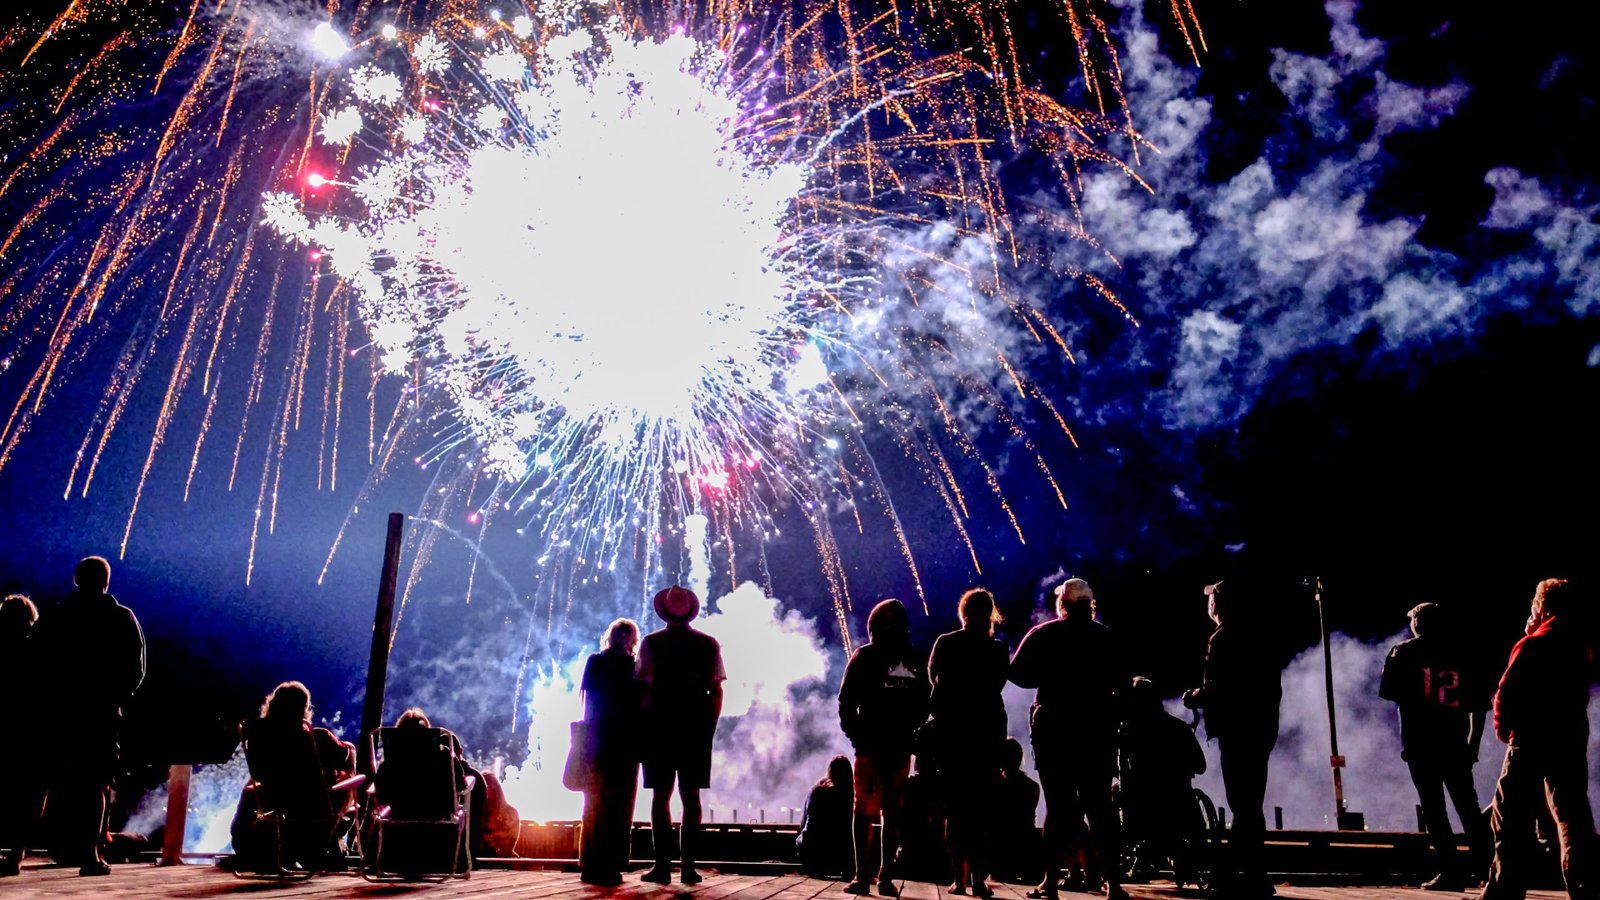 Weekend fireworks show on Annapolis Royal Nova Scotia harbourfront